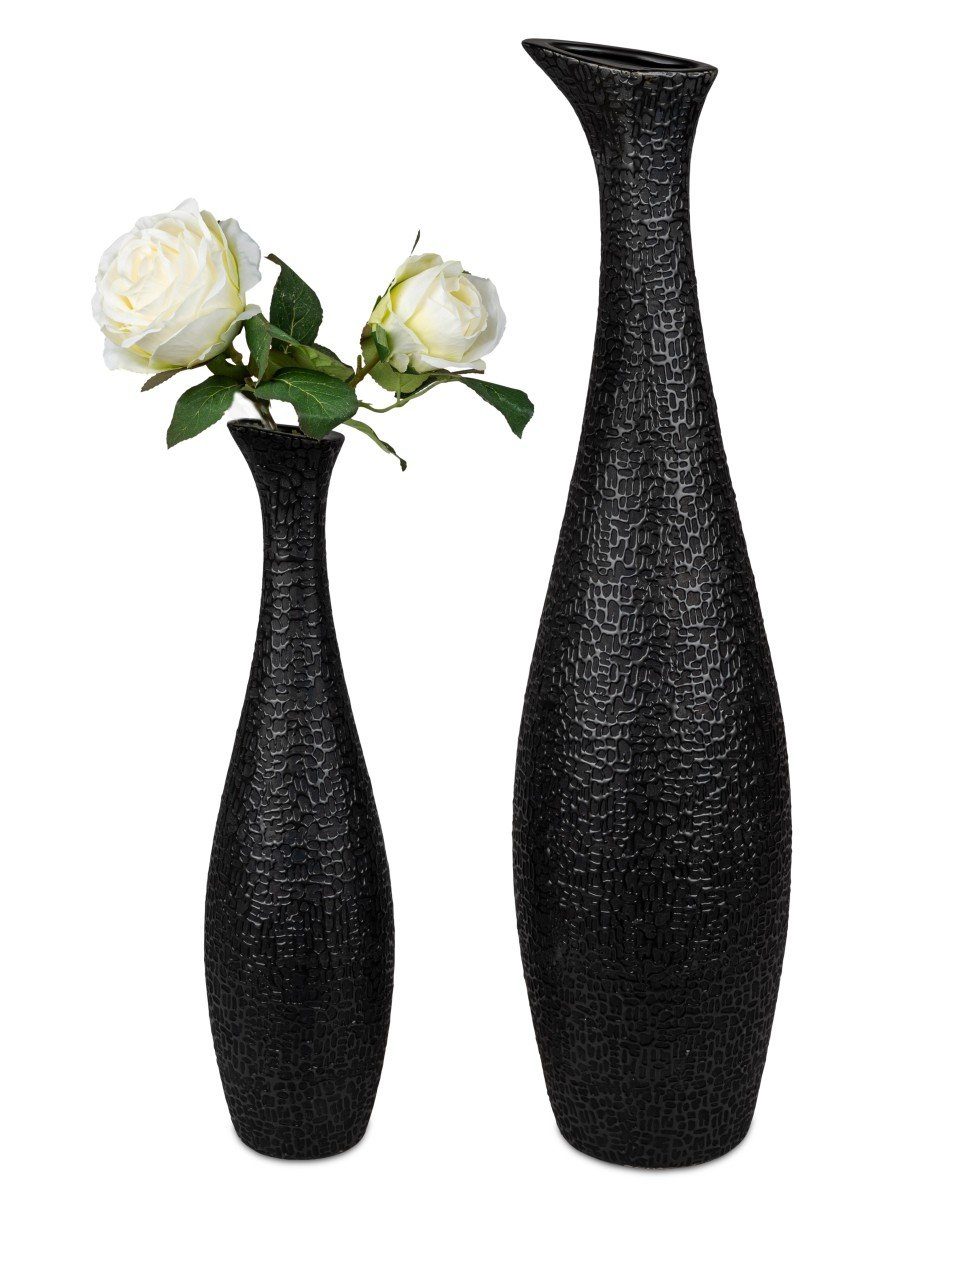 formano Bodenvase Black, H:60cm Schwarz Keramik D:15cm Modern